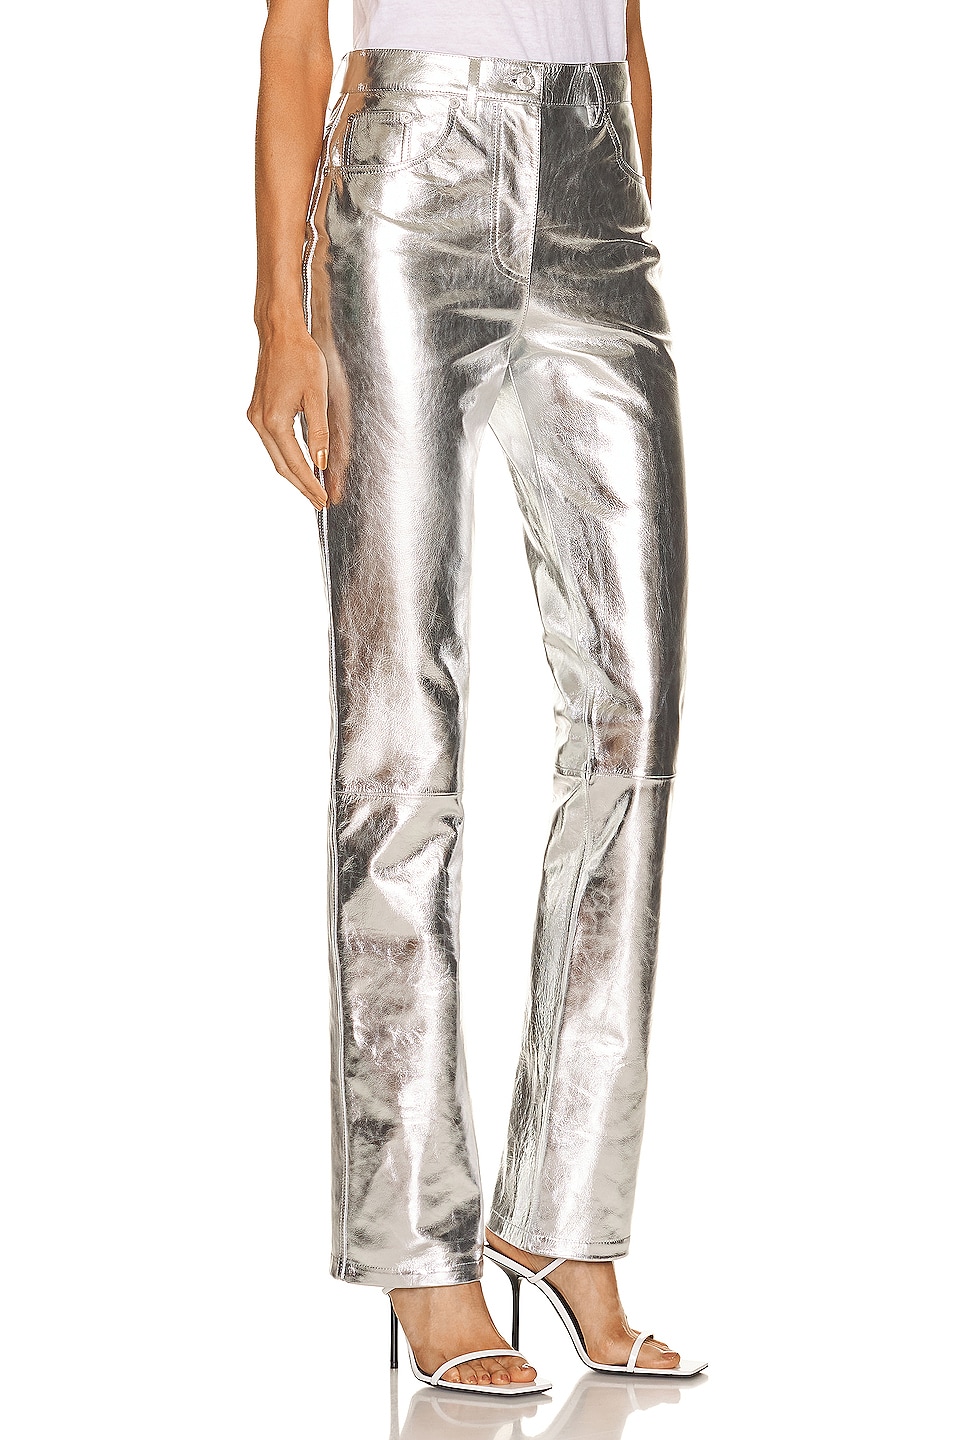 Helmut Lang Mirror Pant in Metallic Silver | FWRD